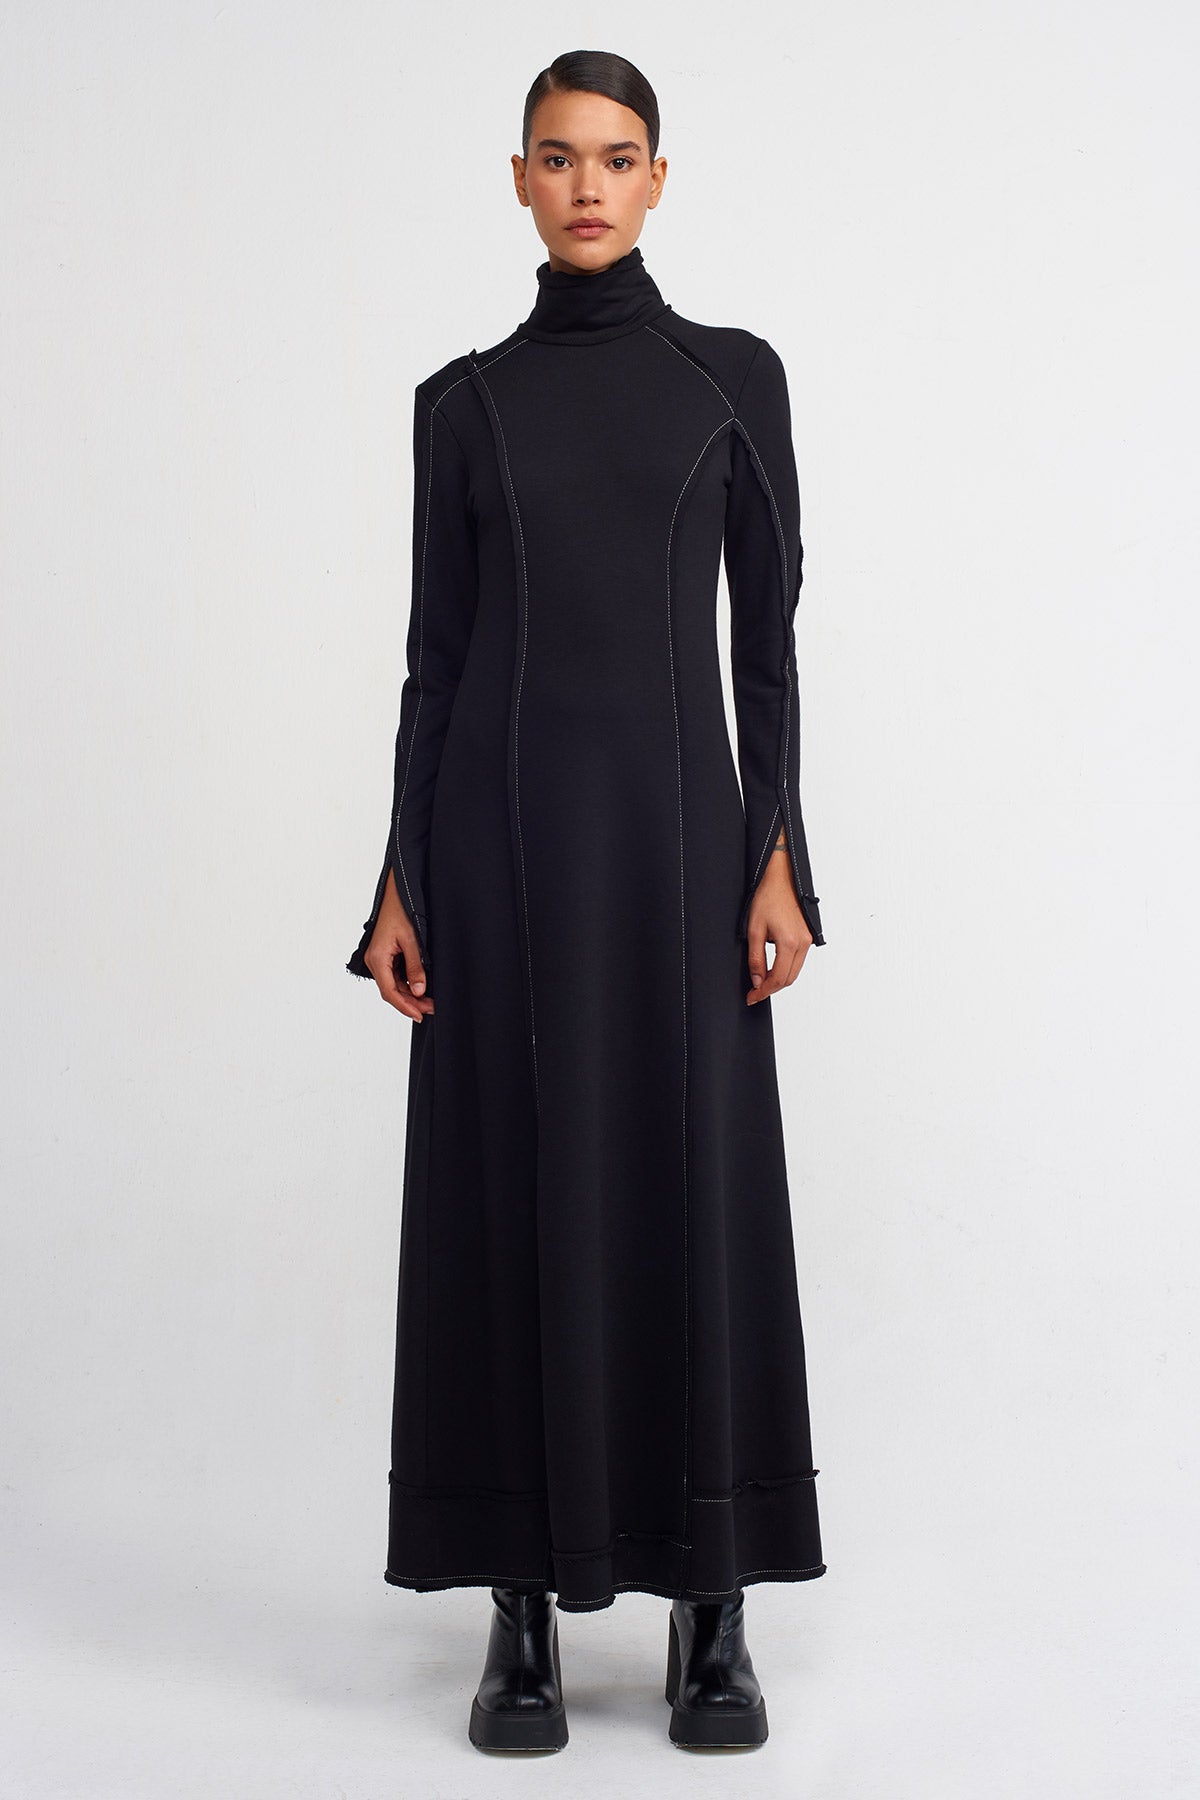 Siyah/Bej Kontrast Dikiş Detaylı Uzun Elbise-Y244014092